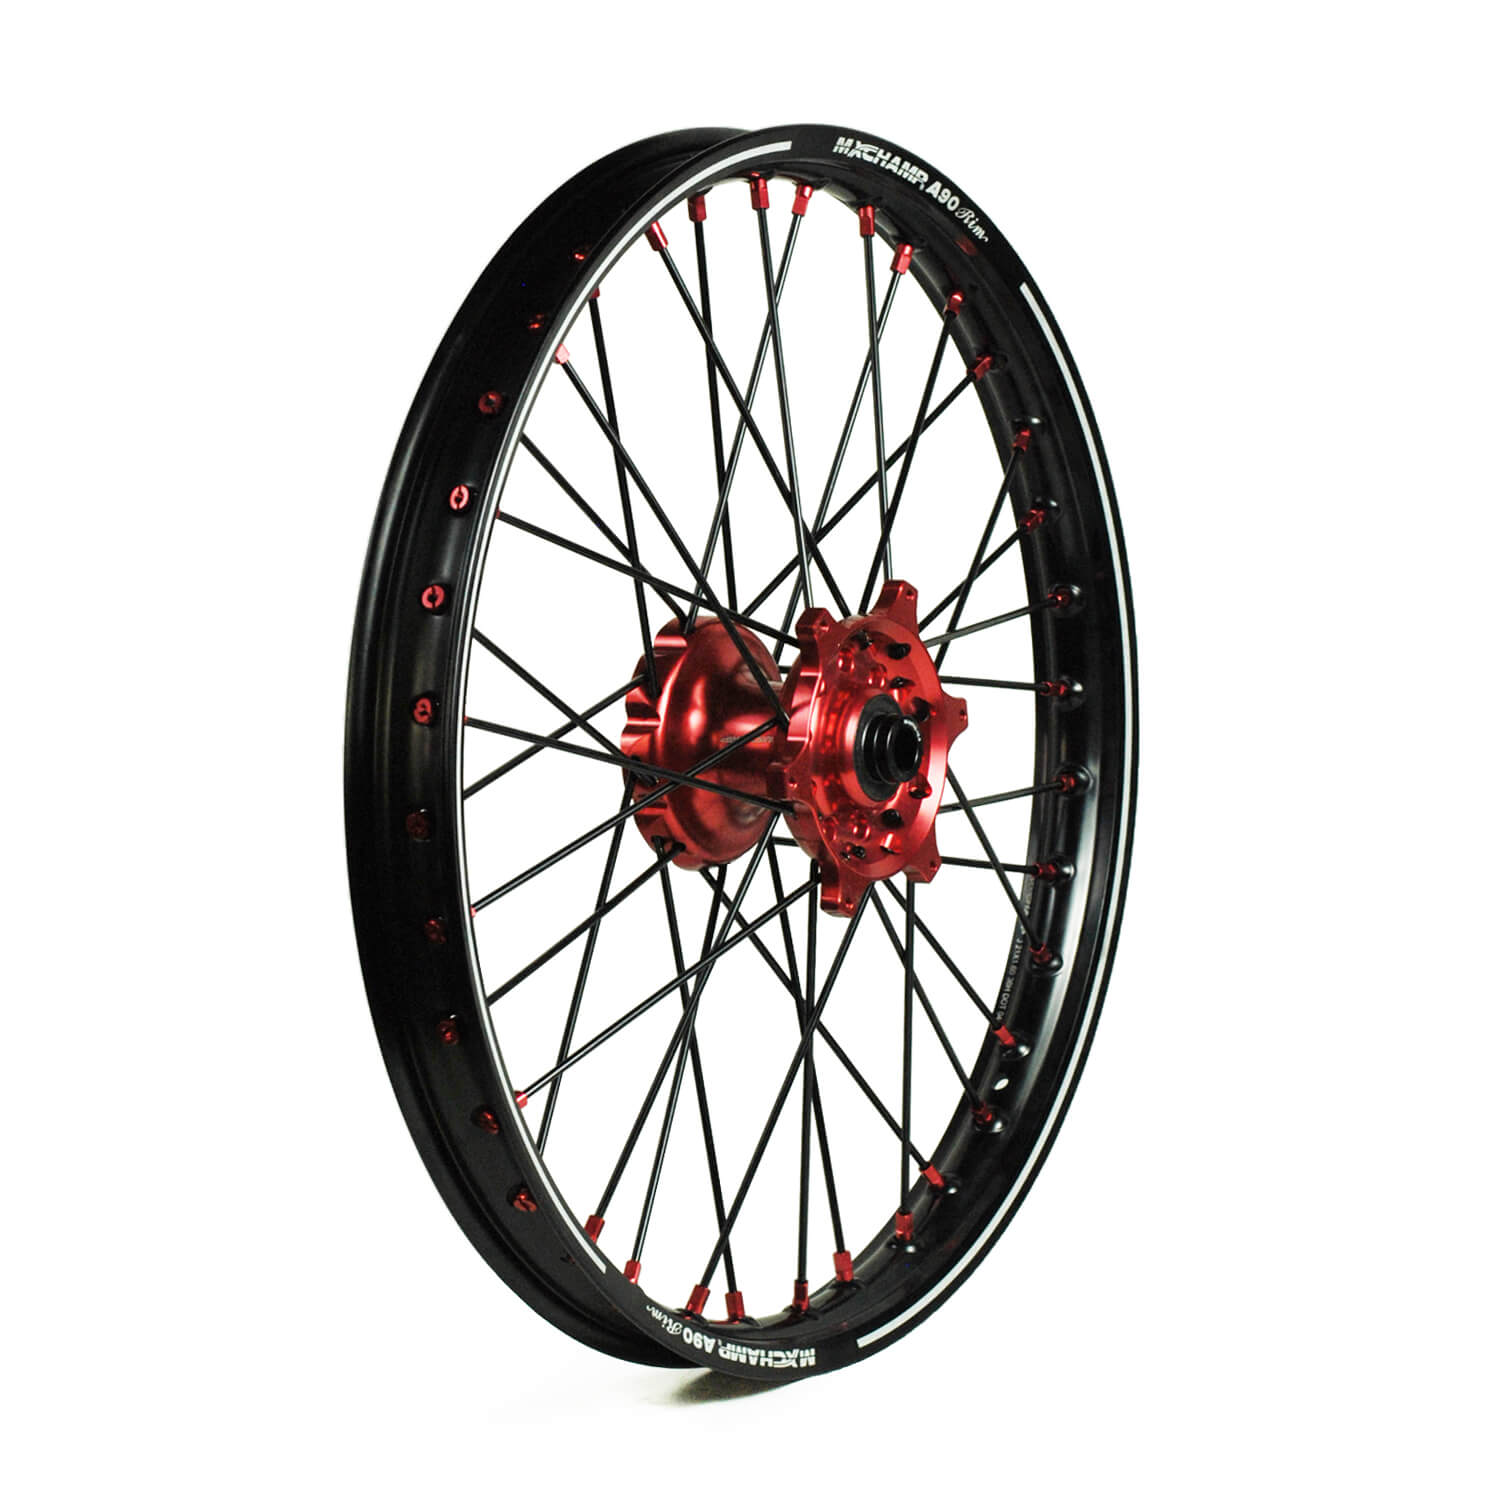 MXCHAMP A90 Dirt Bike Wheels, MXCHAMP A90 Dirt Bike Rims -The Wheel of Champions